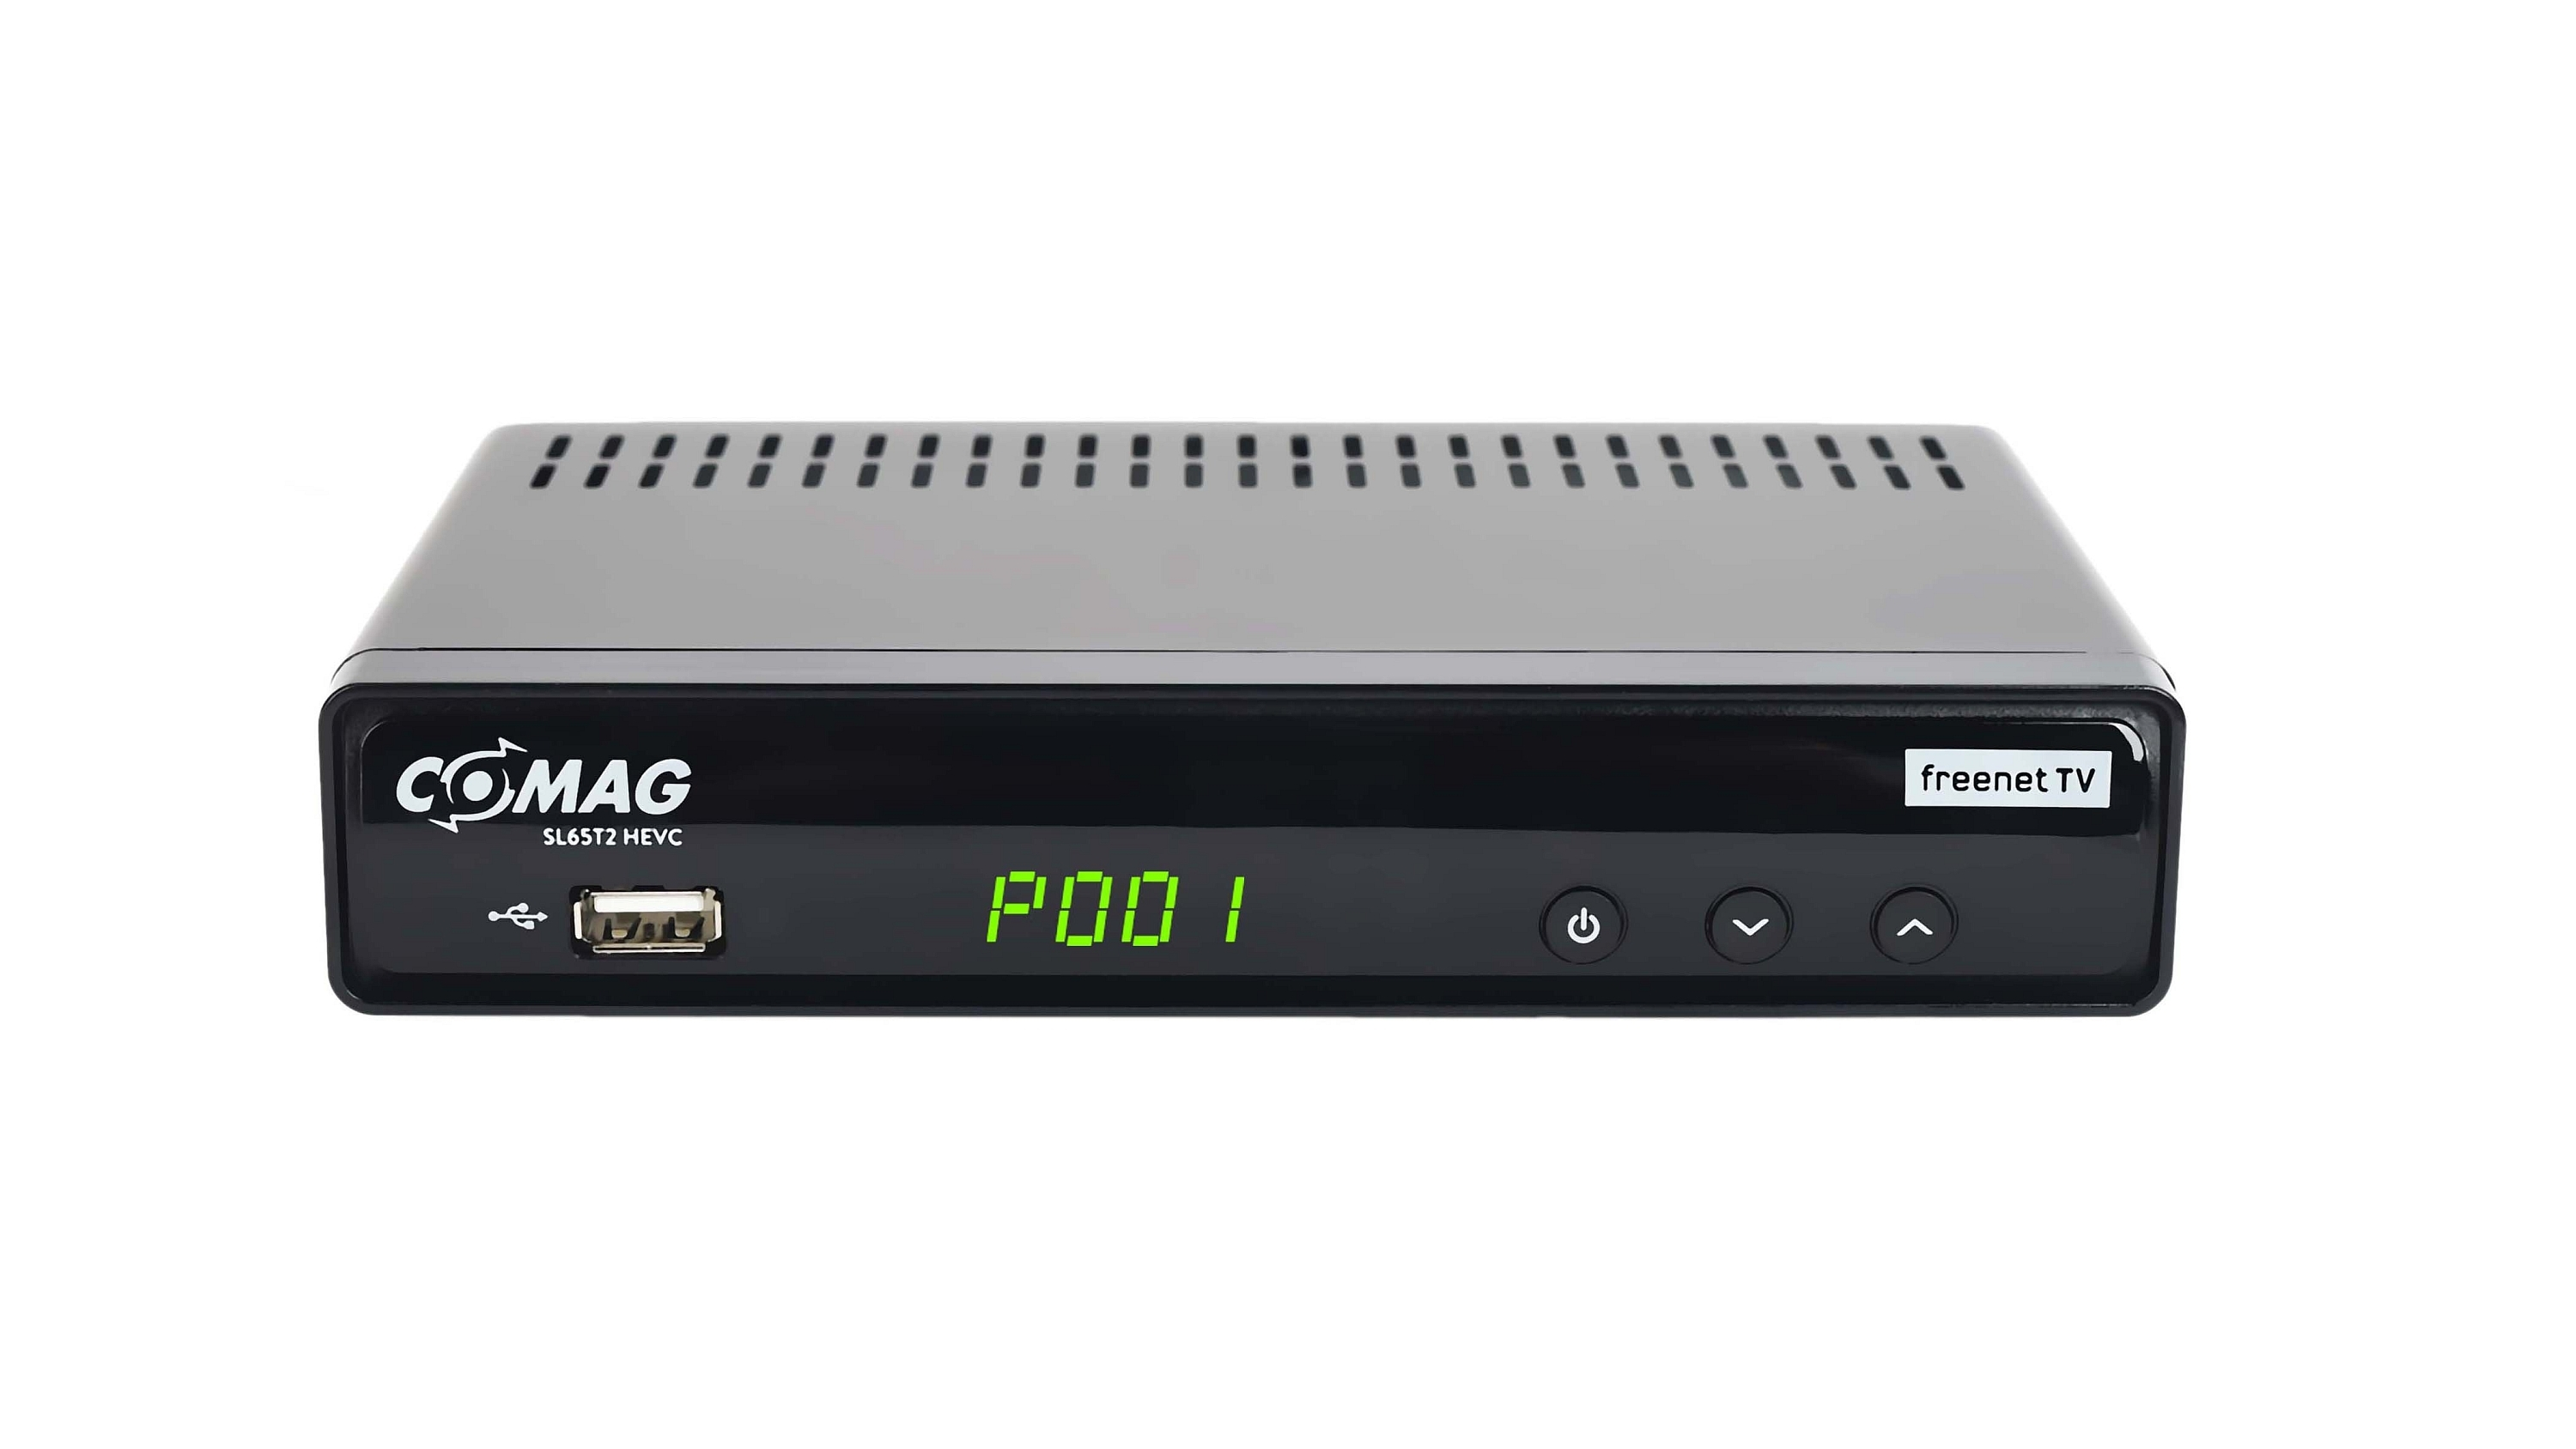 COMAG SL65T2 HDMI (H.265), schwarz) (H.264), DVB-T-Receiver DVB-T2 PVR-Funktion, (HDTV, DVB-T, Bundel DVB-T2